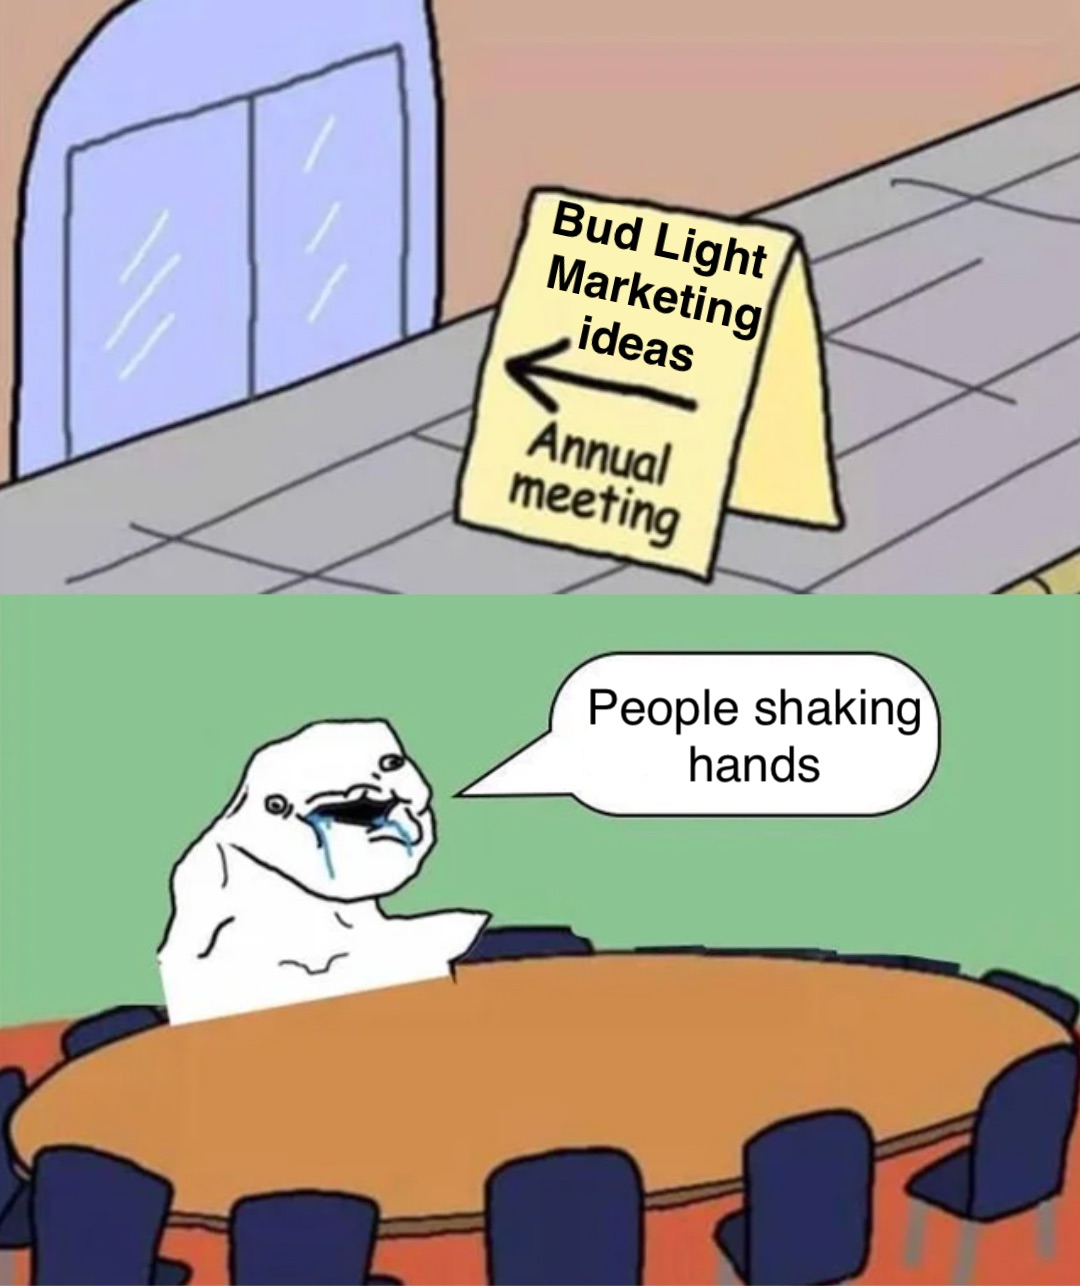 Bud Light
Marketing ideas People shaking 
hands